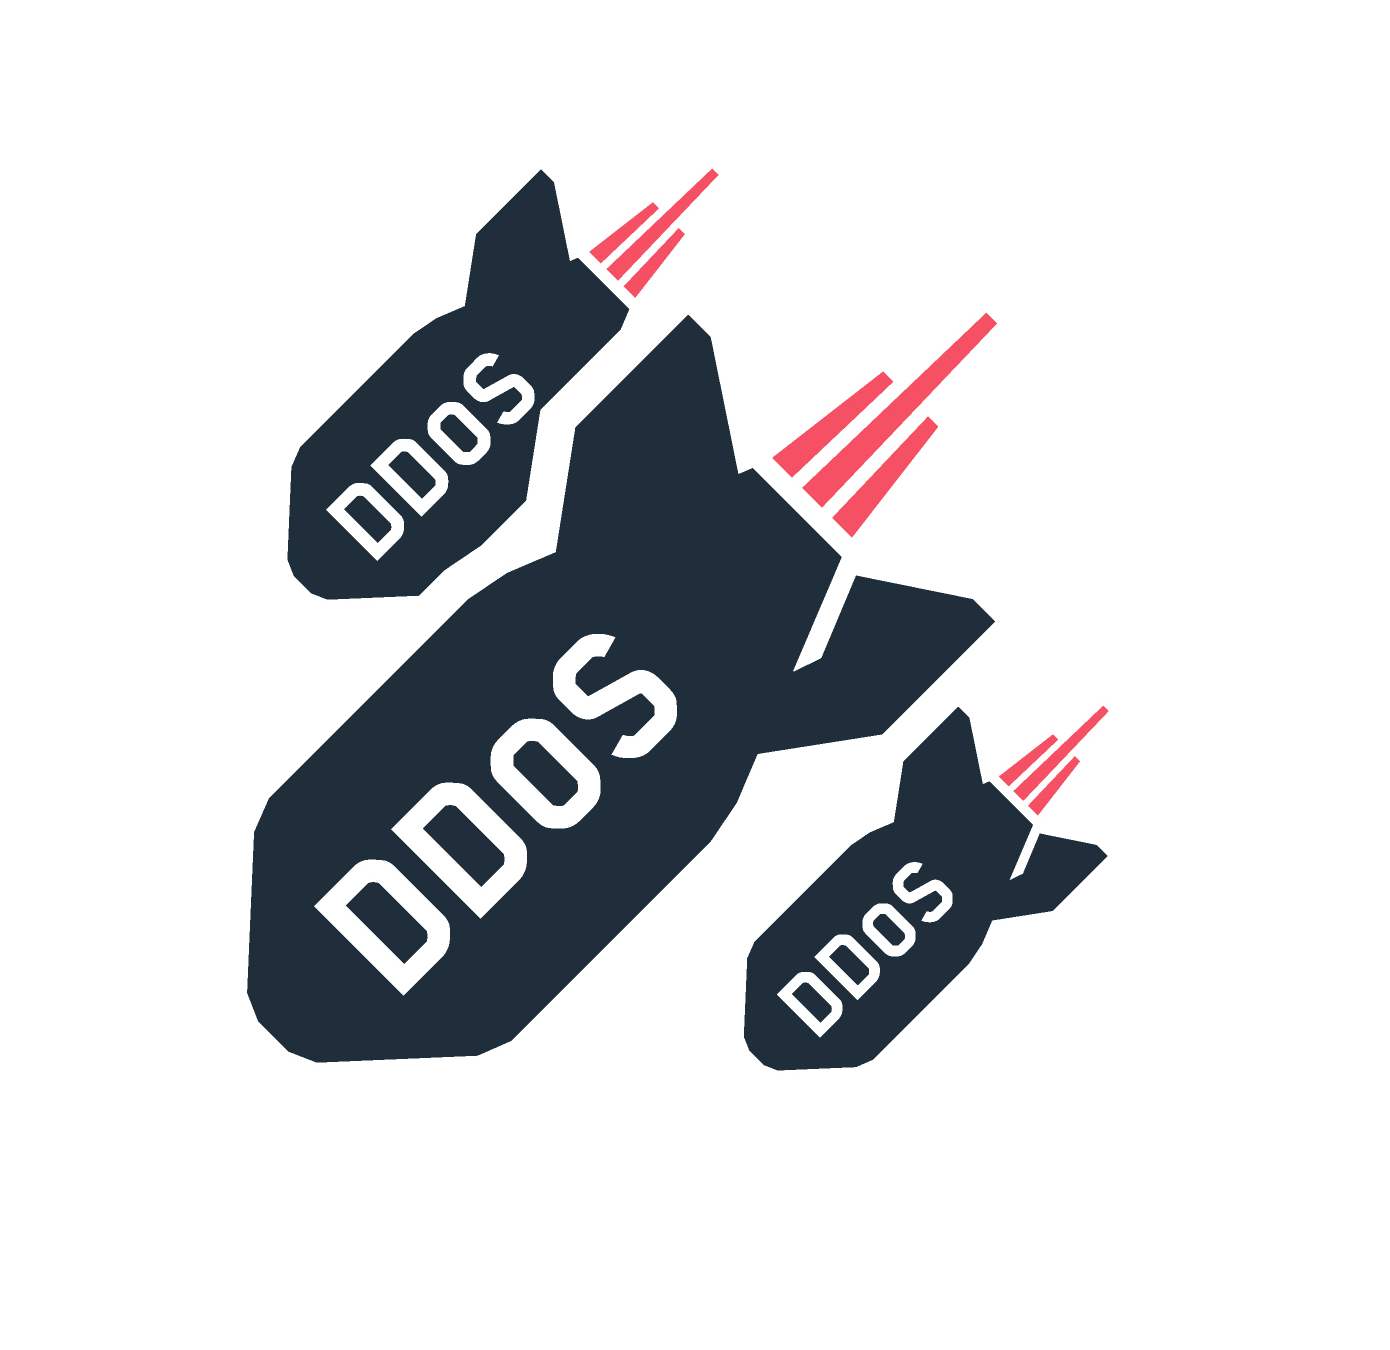 ddos攻击是什么意思啊 (DDoS攻击的防御策略与技巧)-偌夕博客